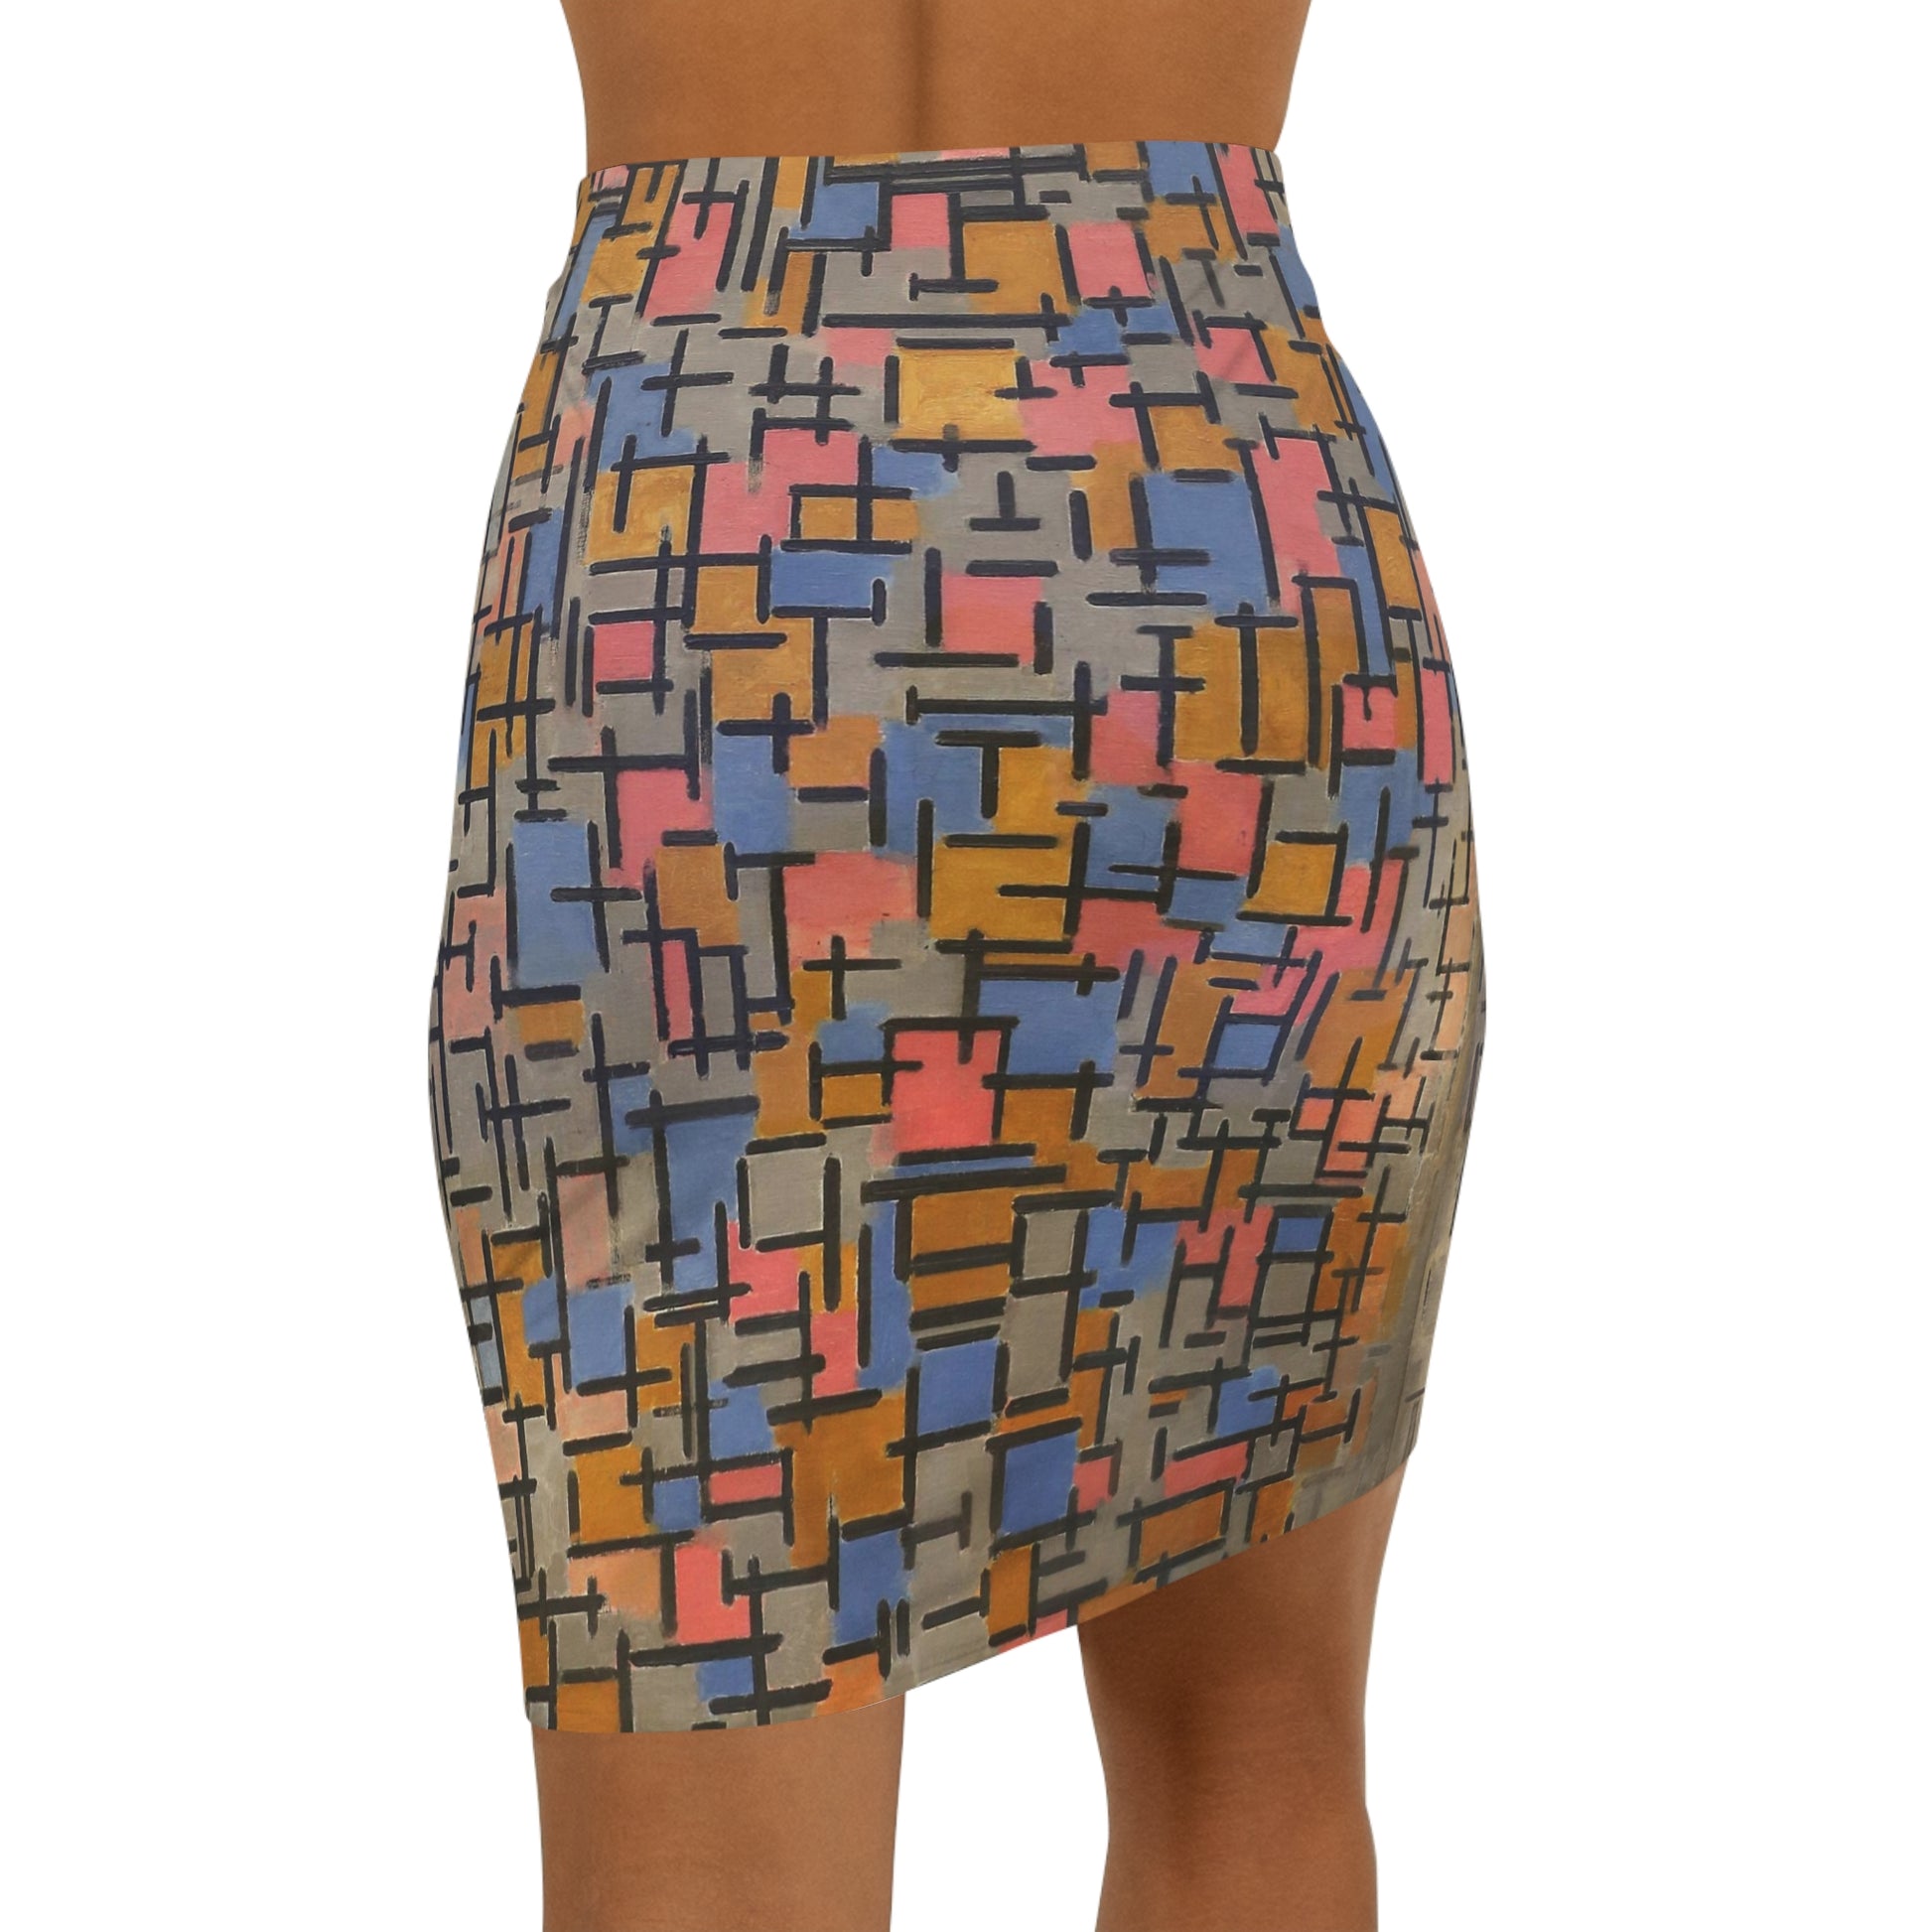 Piet Mondrian skirt